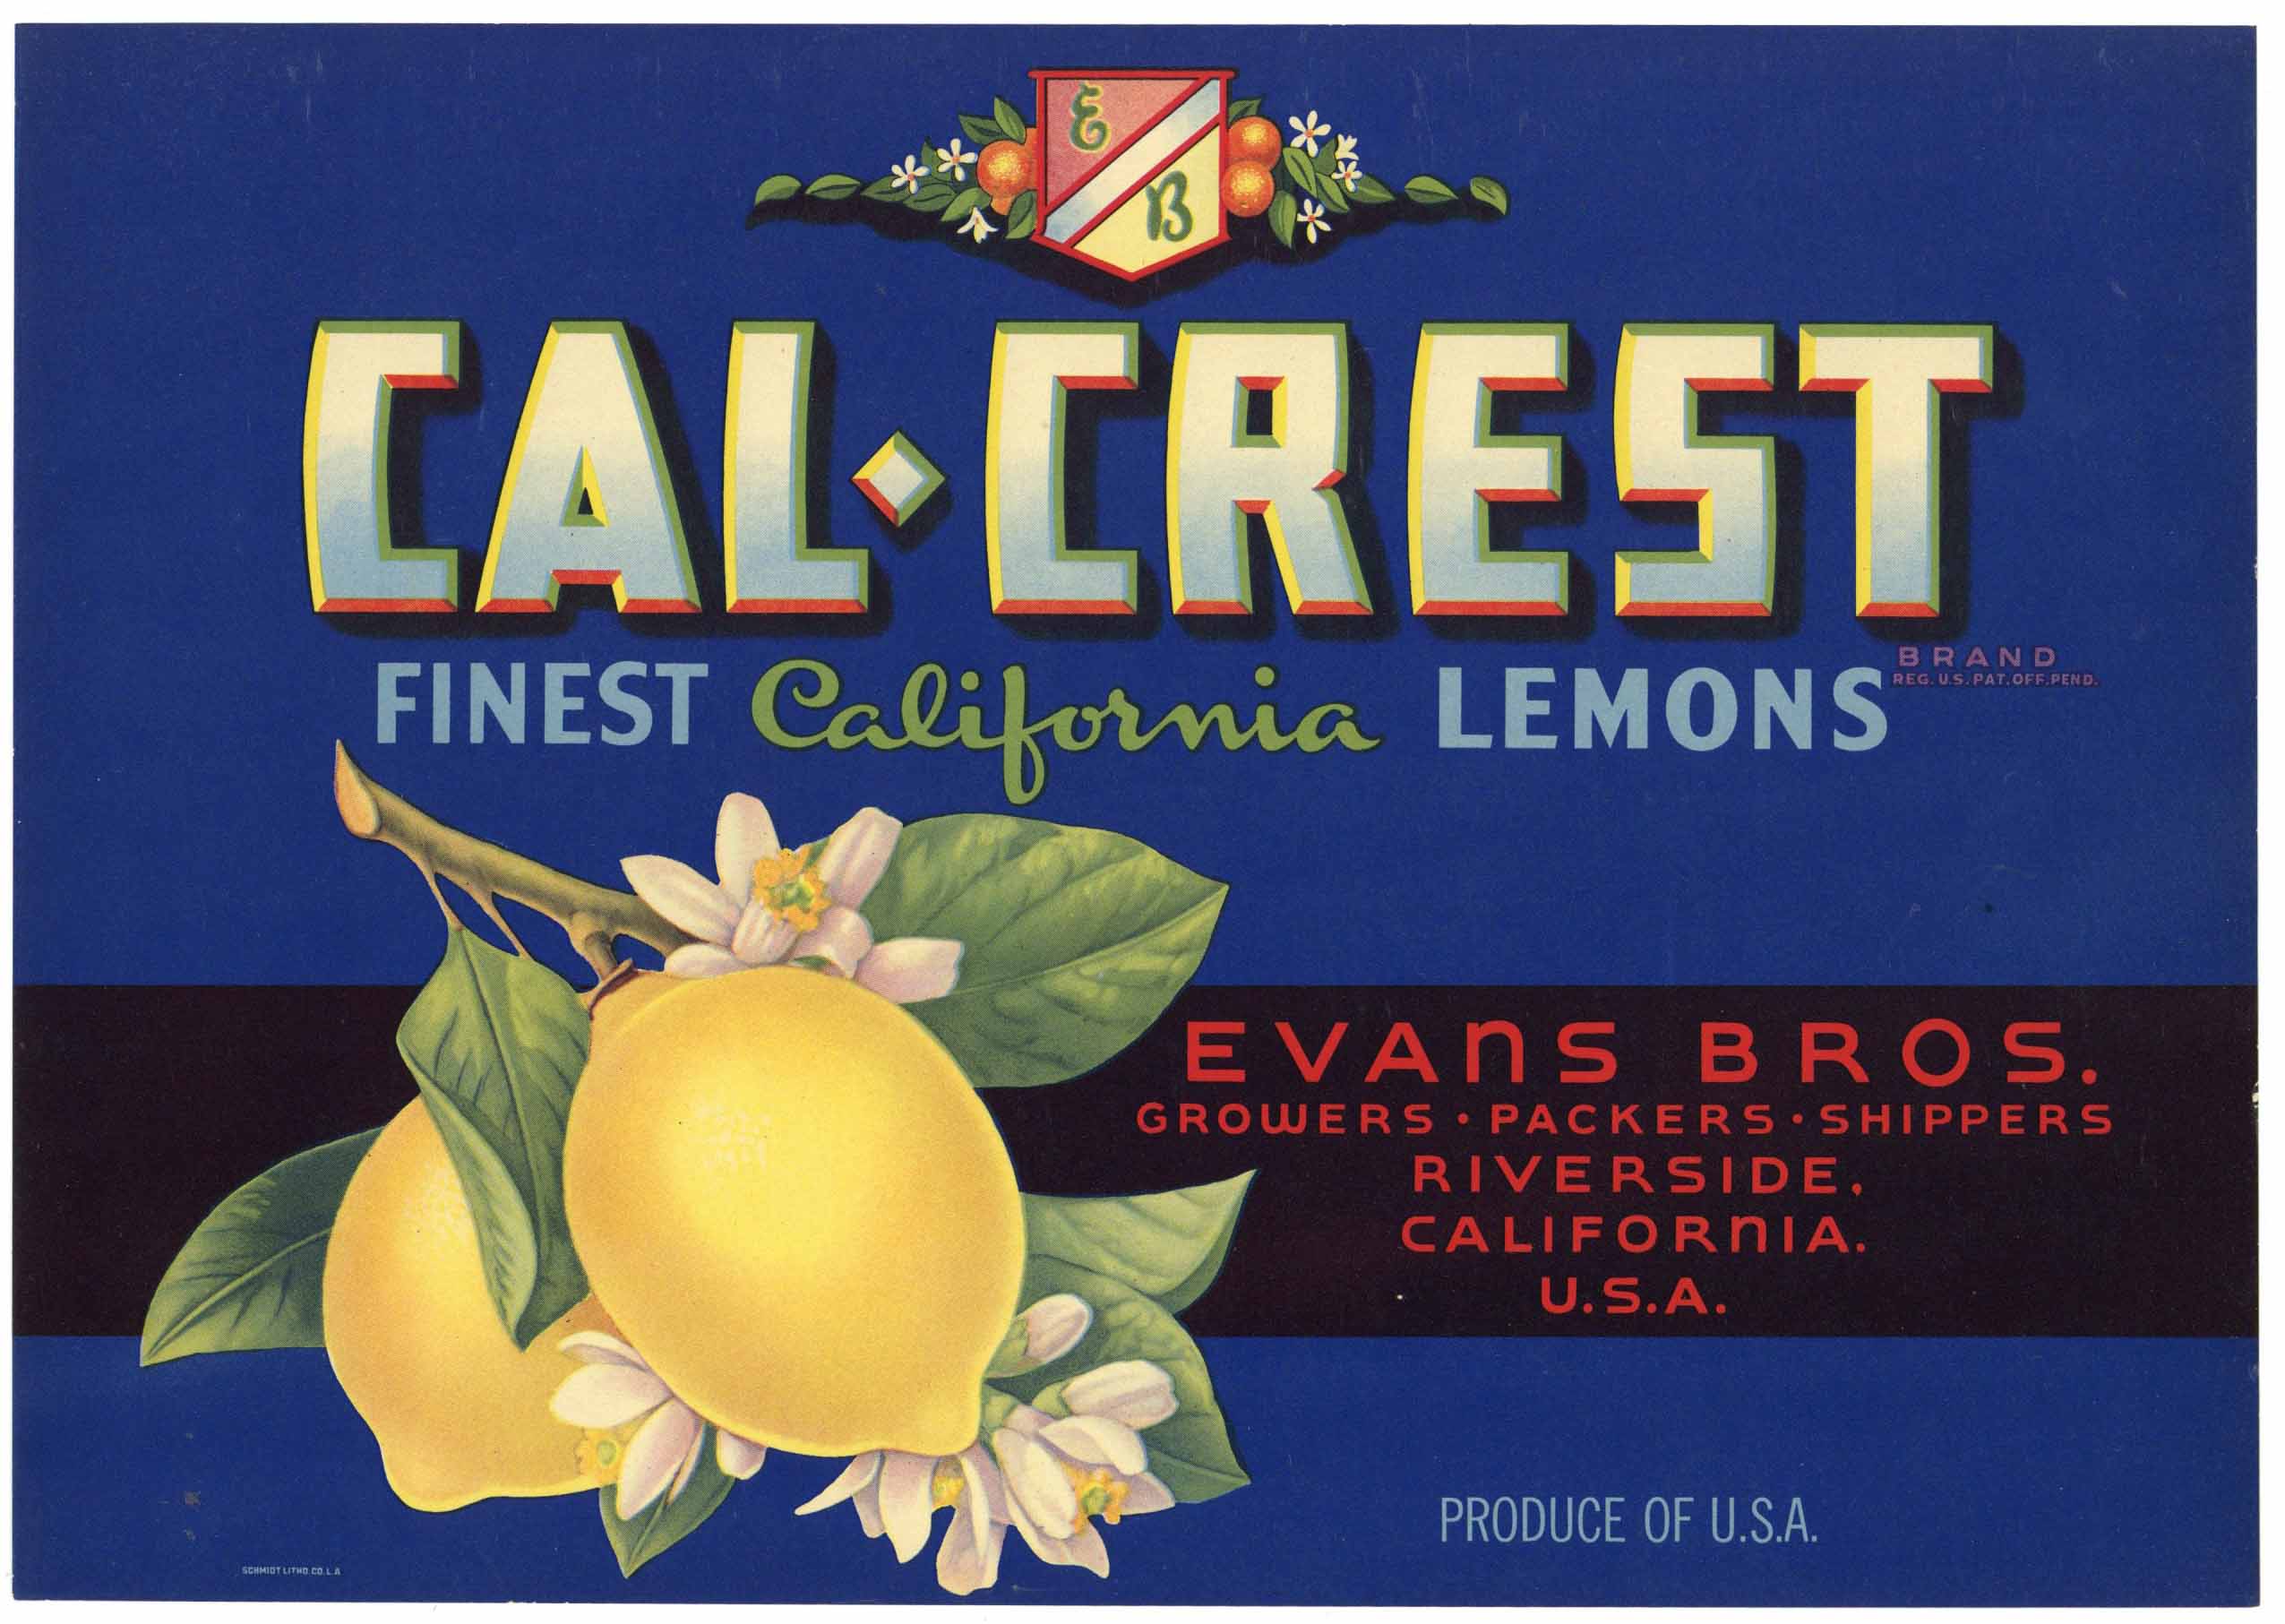 Crystal Brand, Riverside, California, Citrus Crate Label (100